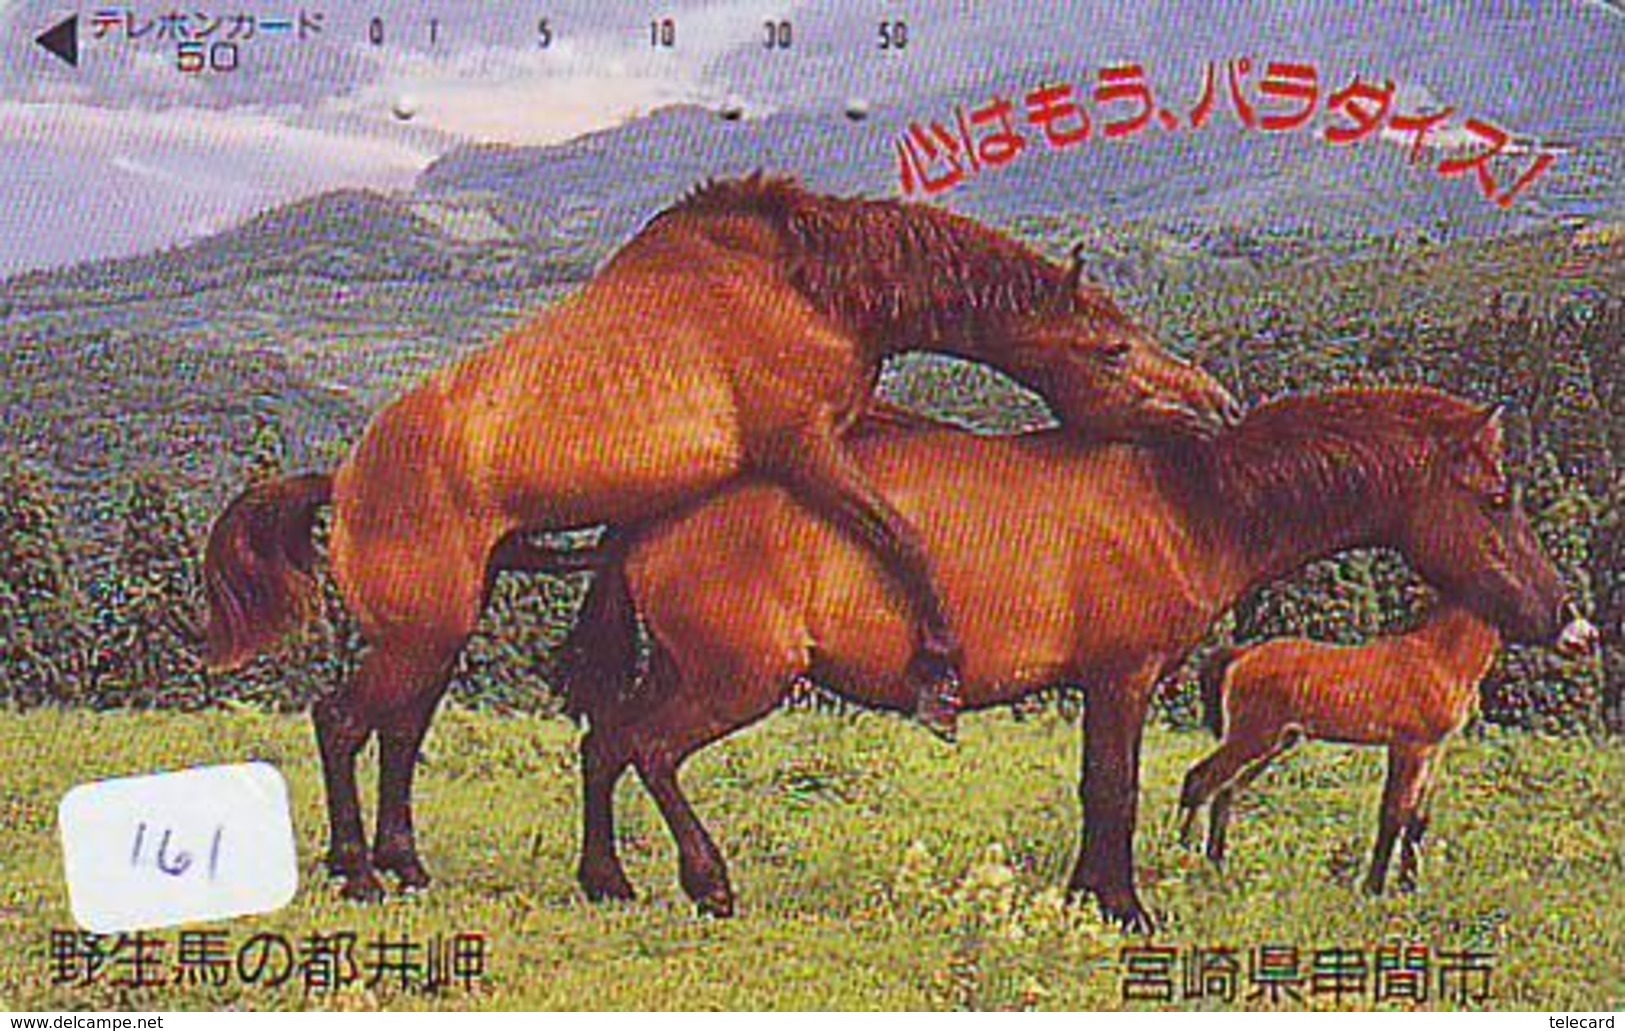 CHEVAL PFERD REITEN Horse Paard Caballo (161) CHEVAL étalon Reproduction HORSE MATING - Pferde